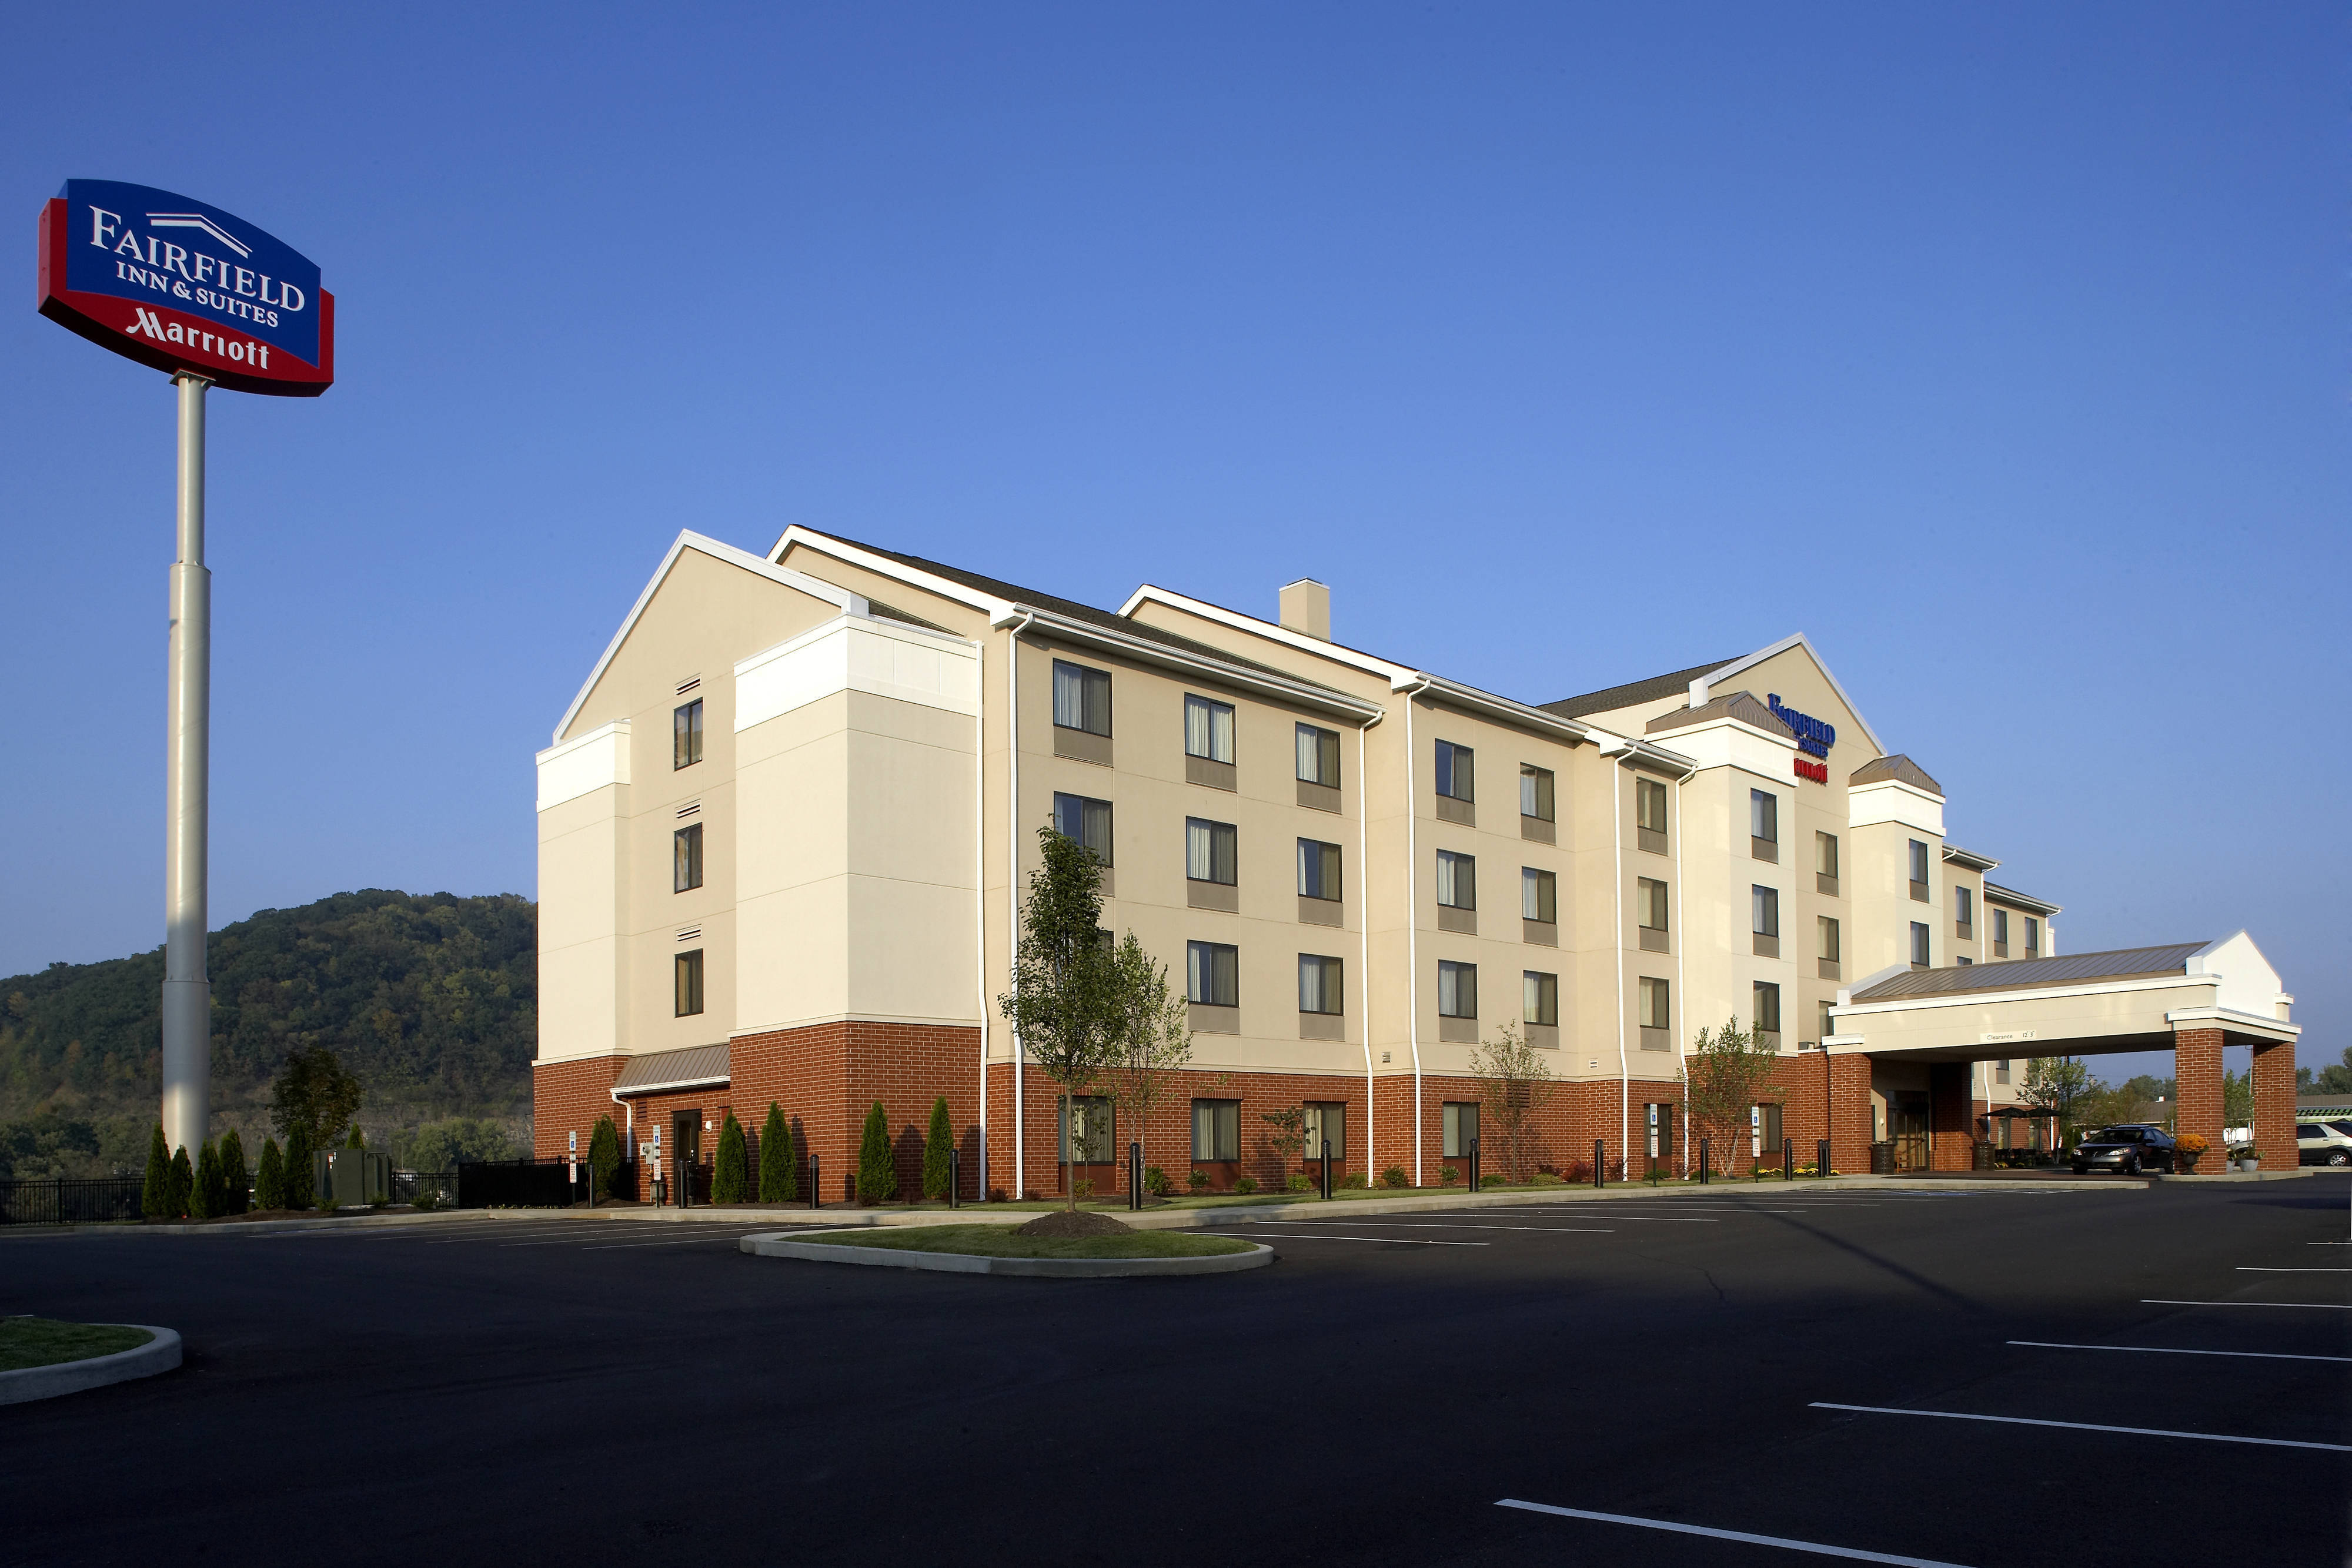 Photo of Fairfield Inn & Suites Pittsburgh Neville Island, Pittsburgh, PA